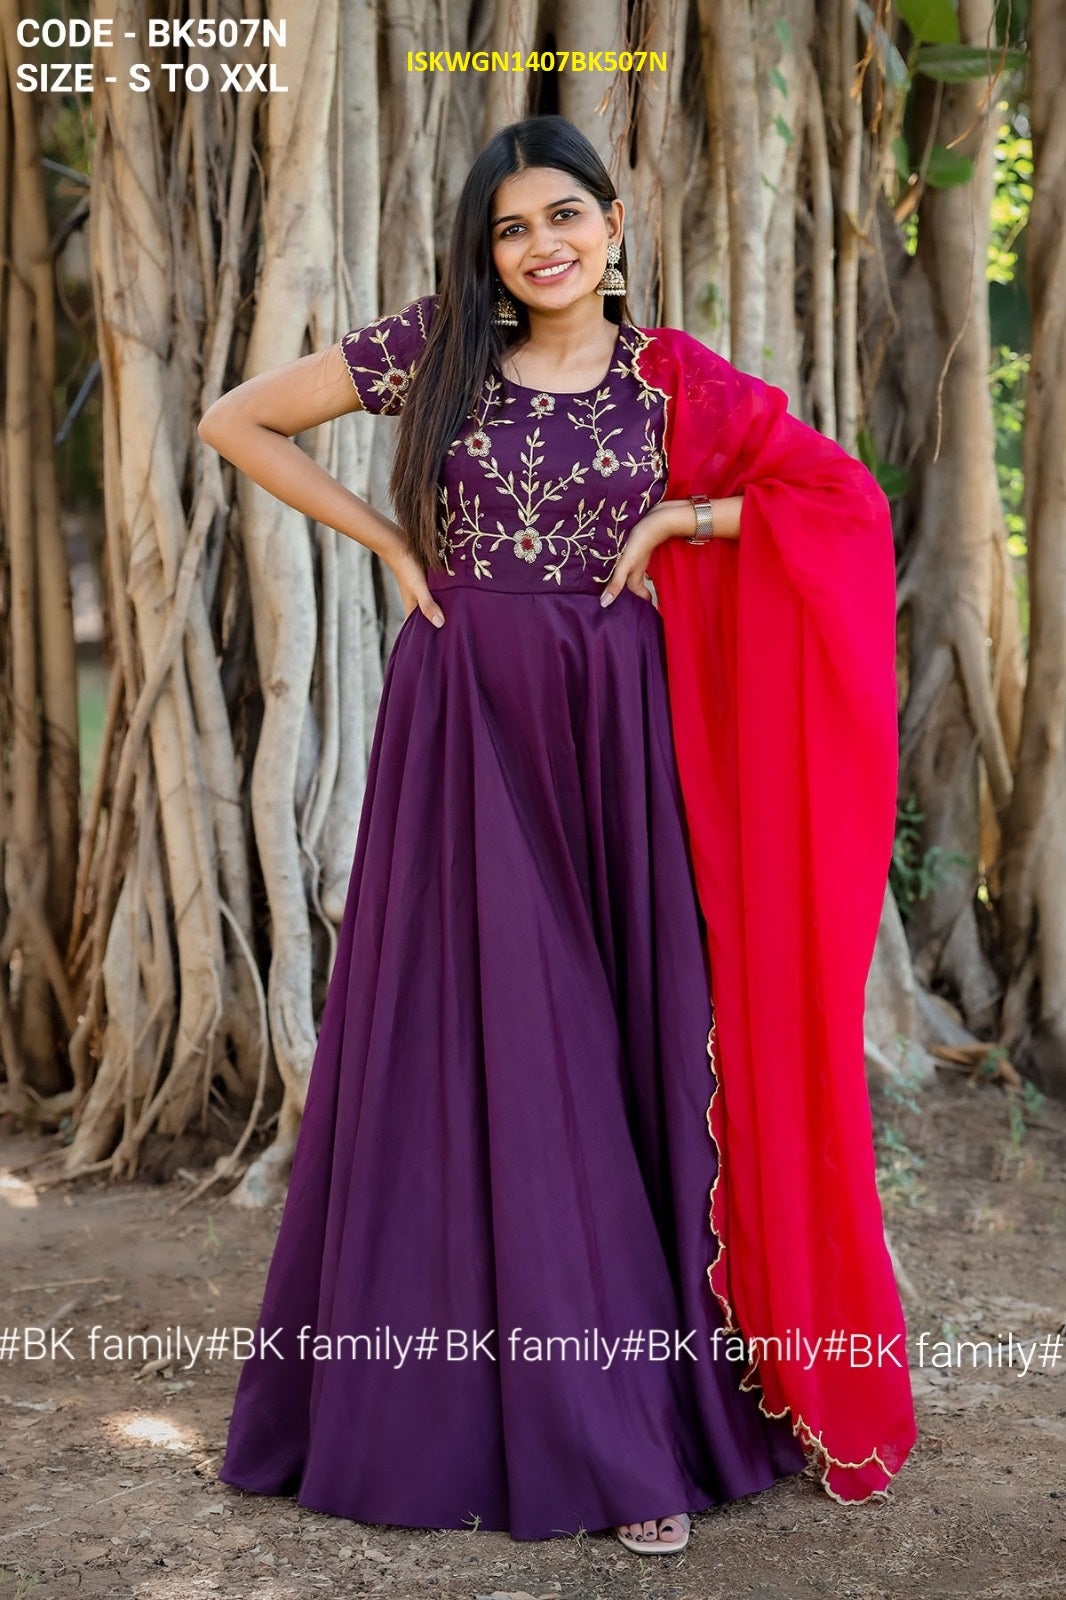 New kerala engagement dress designsBeautiful kerala engagement outfits   YouTube